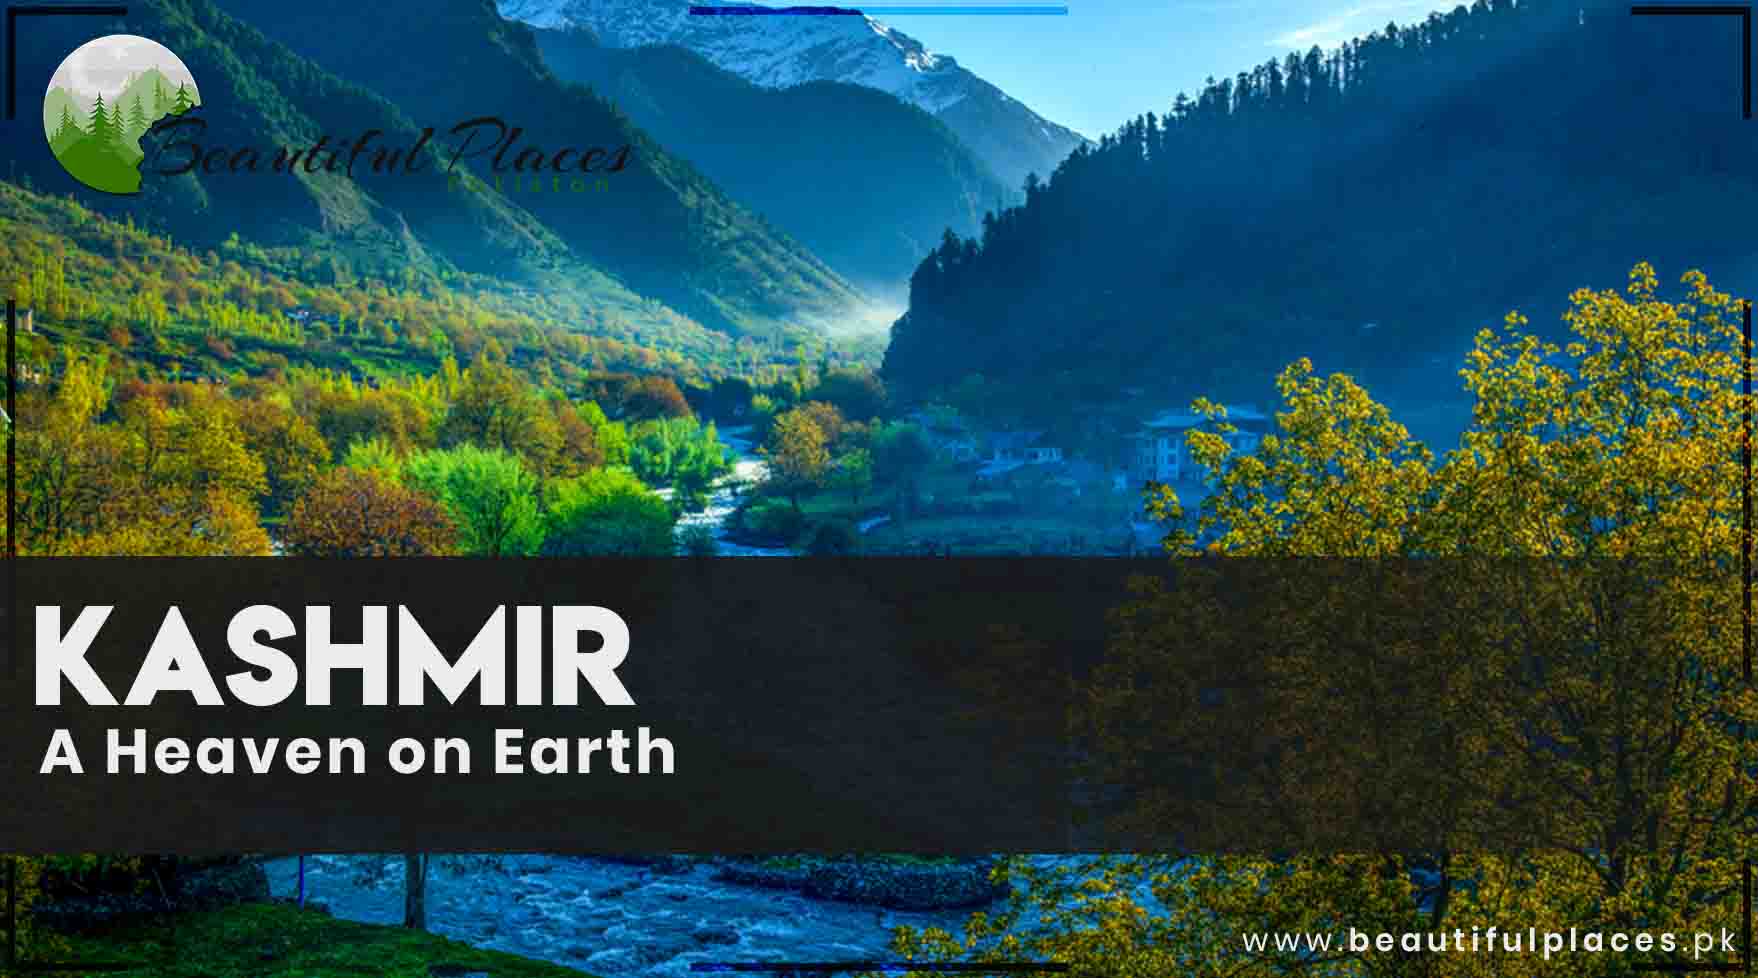 Tour of Kashmir | A Heaven on Earth